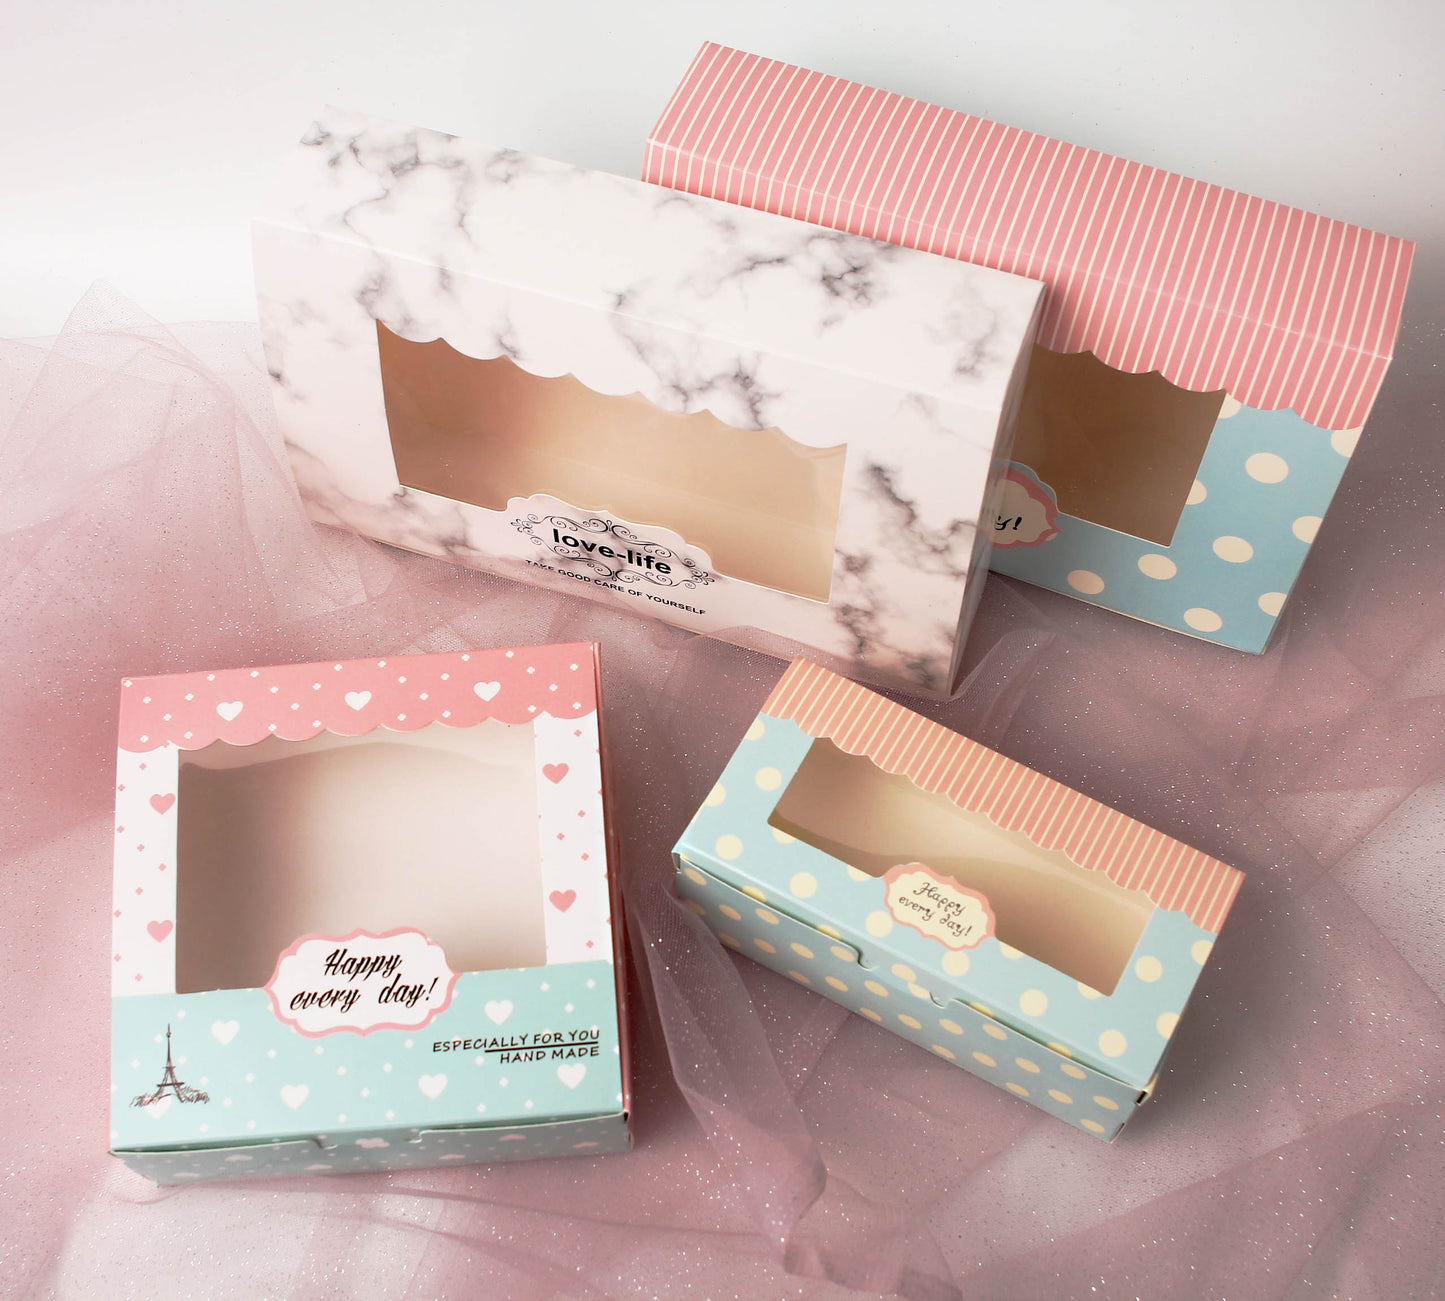 Mooncake box / Cake box/ cupcake/ Brownie / cream puff packaging box cake pastry packing box